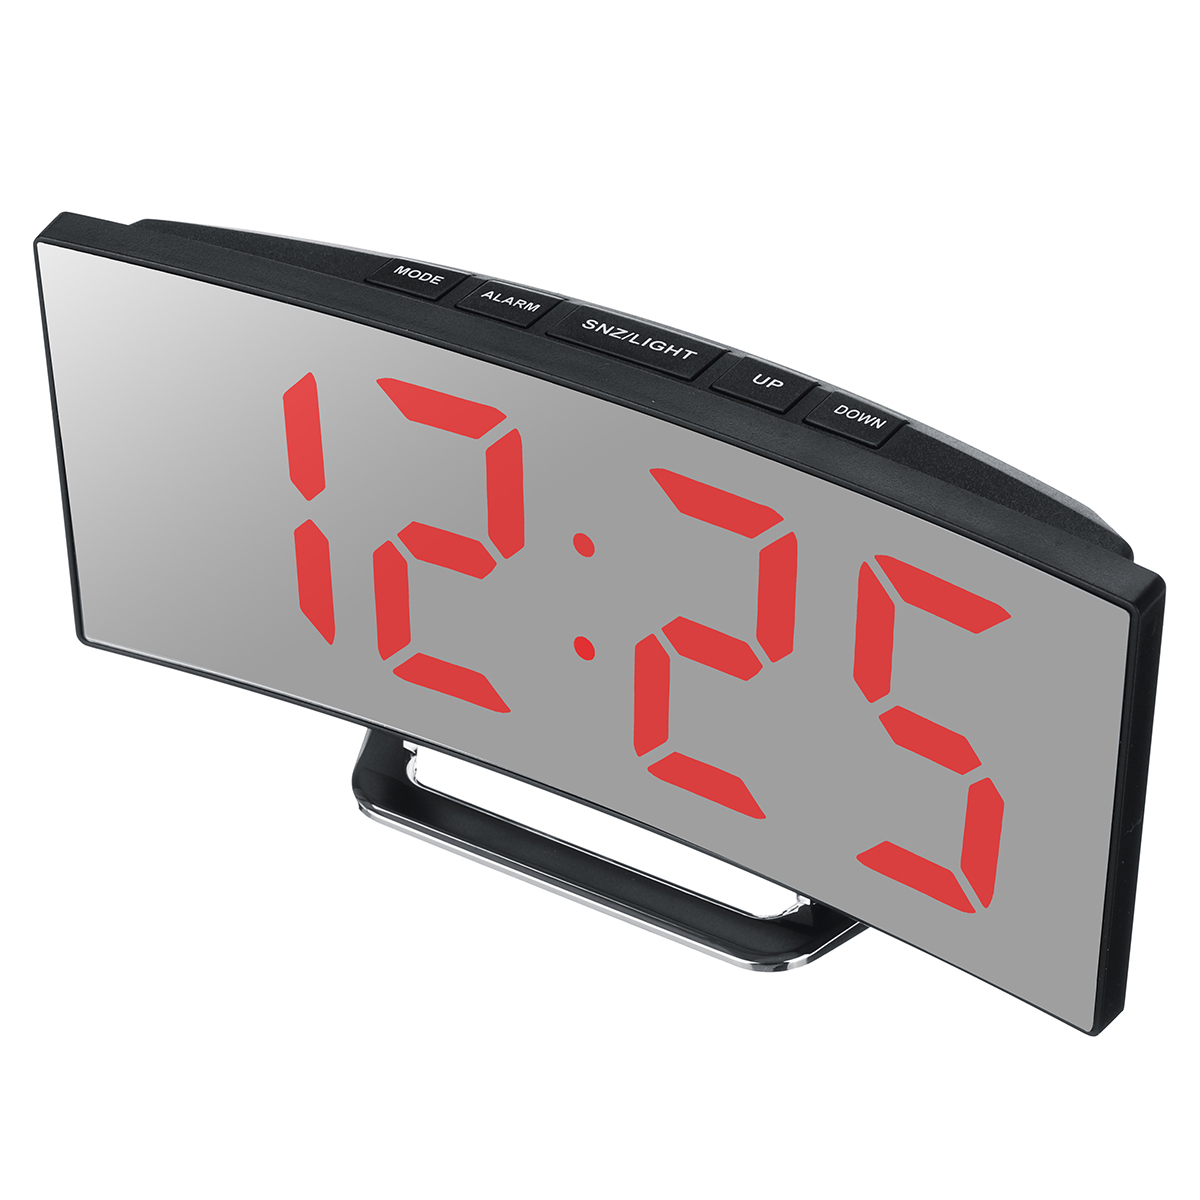 Curved-LED-Digital-Alarm-Clock-Mirror-Table-Display-Temperature-Snooze-USB-Room-1639017-8